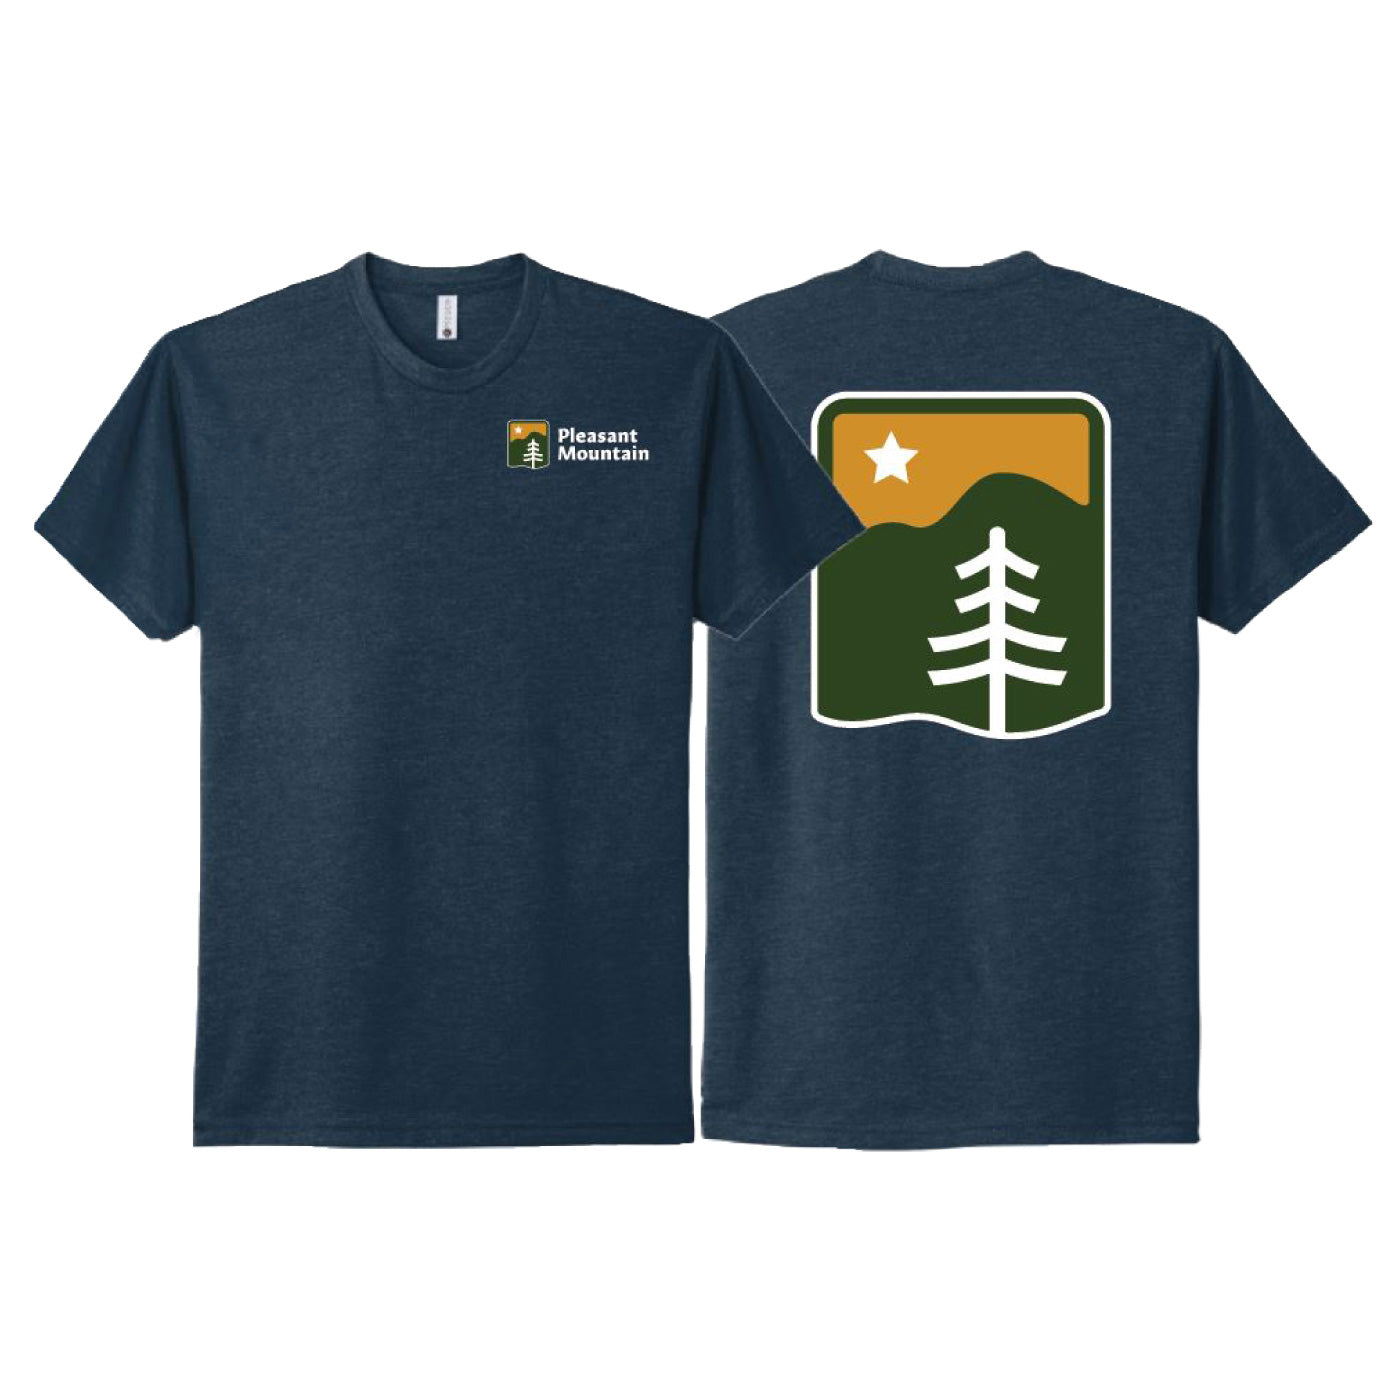 Pleasant Mountain Short Sleeve T-shirt 2 Full Color Logos NAVY